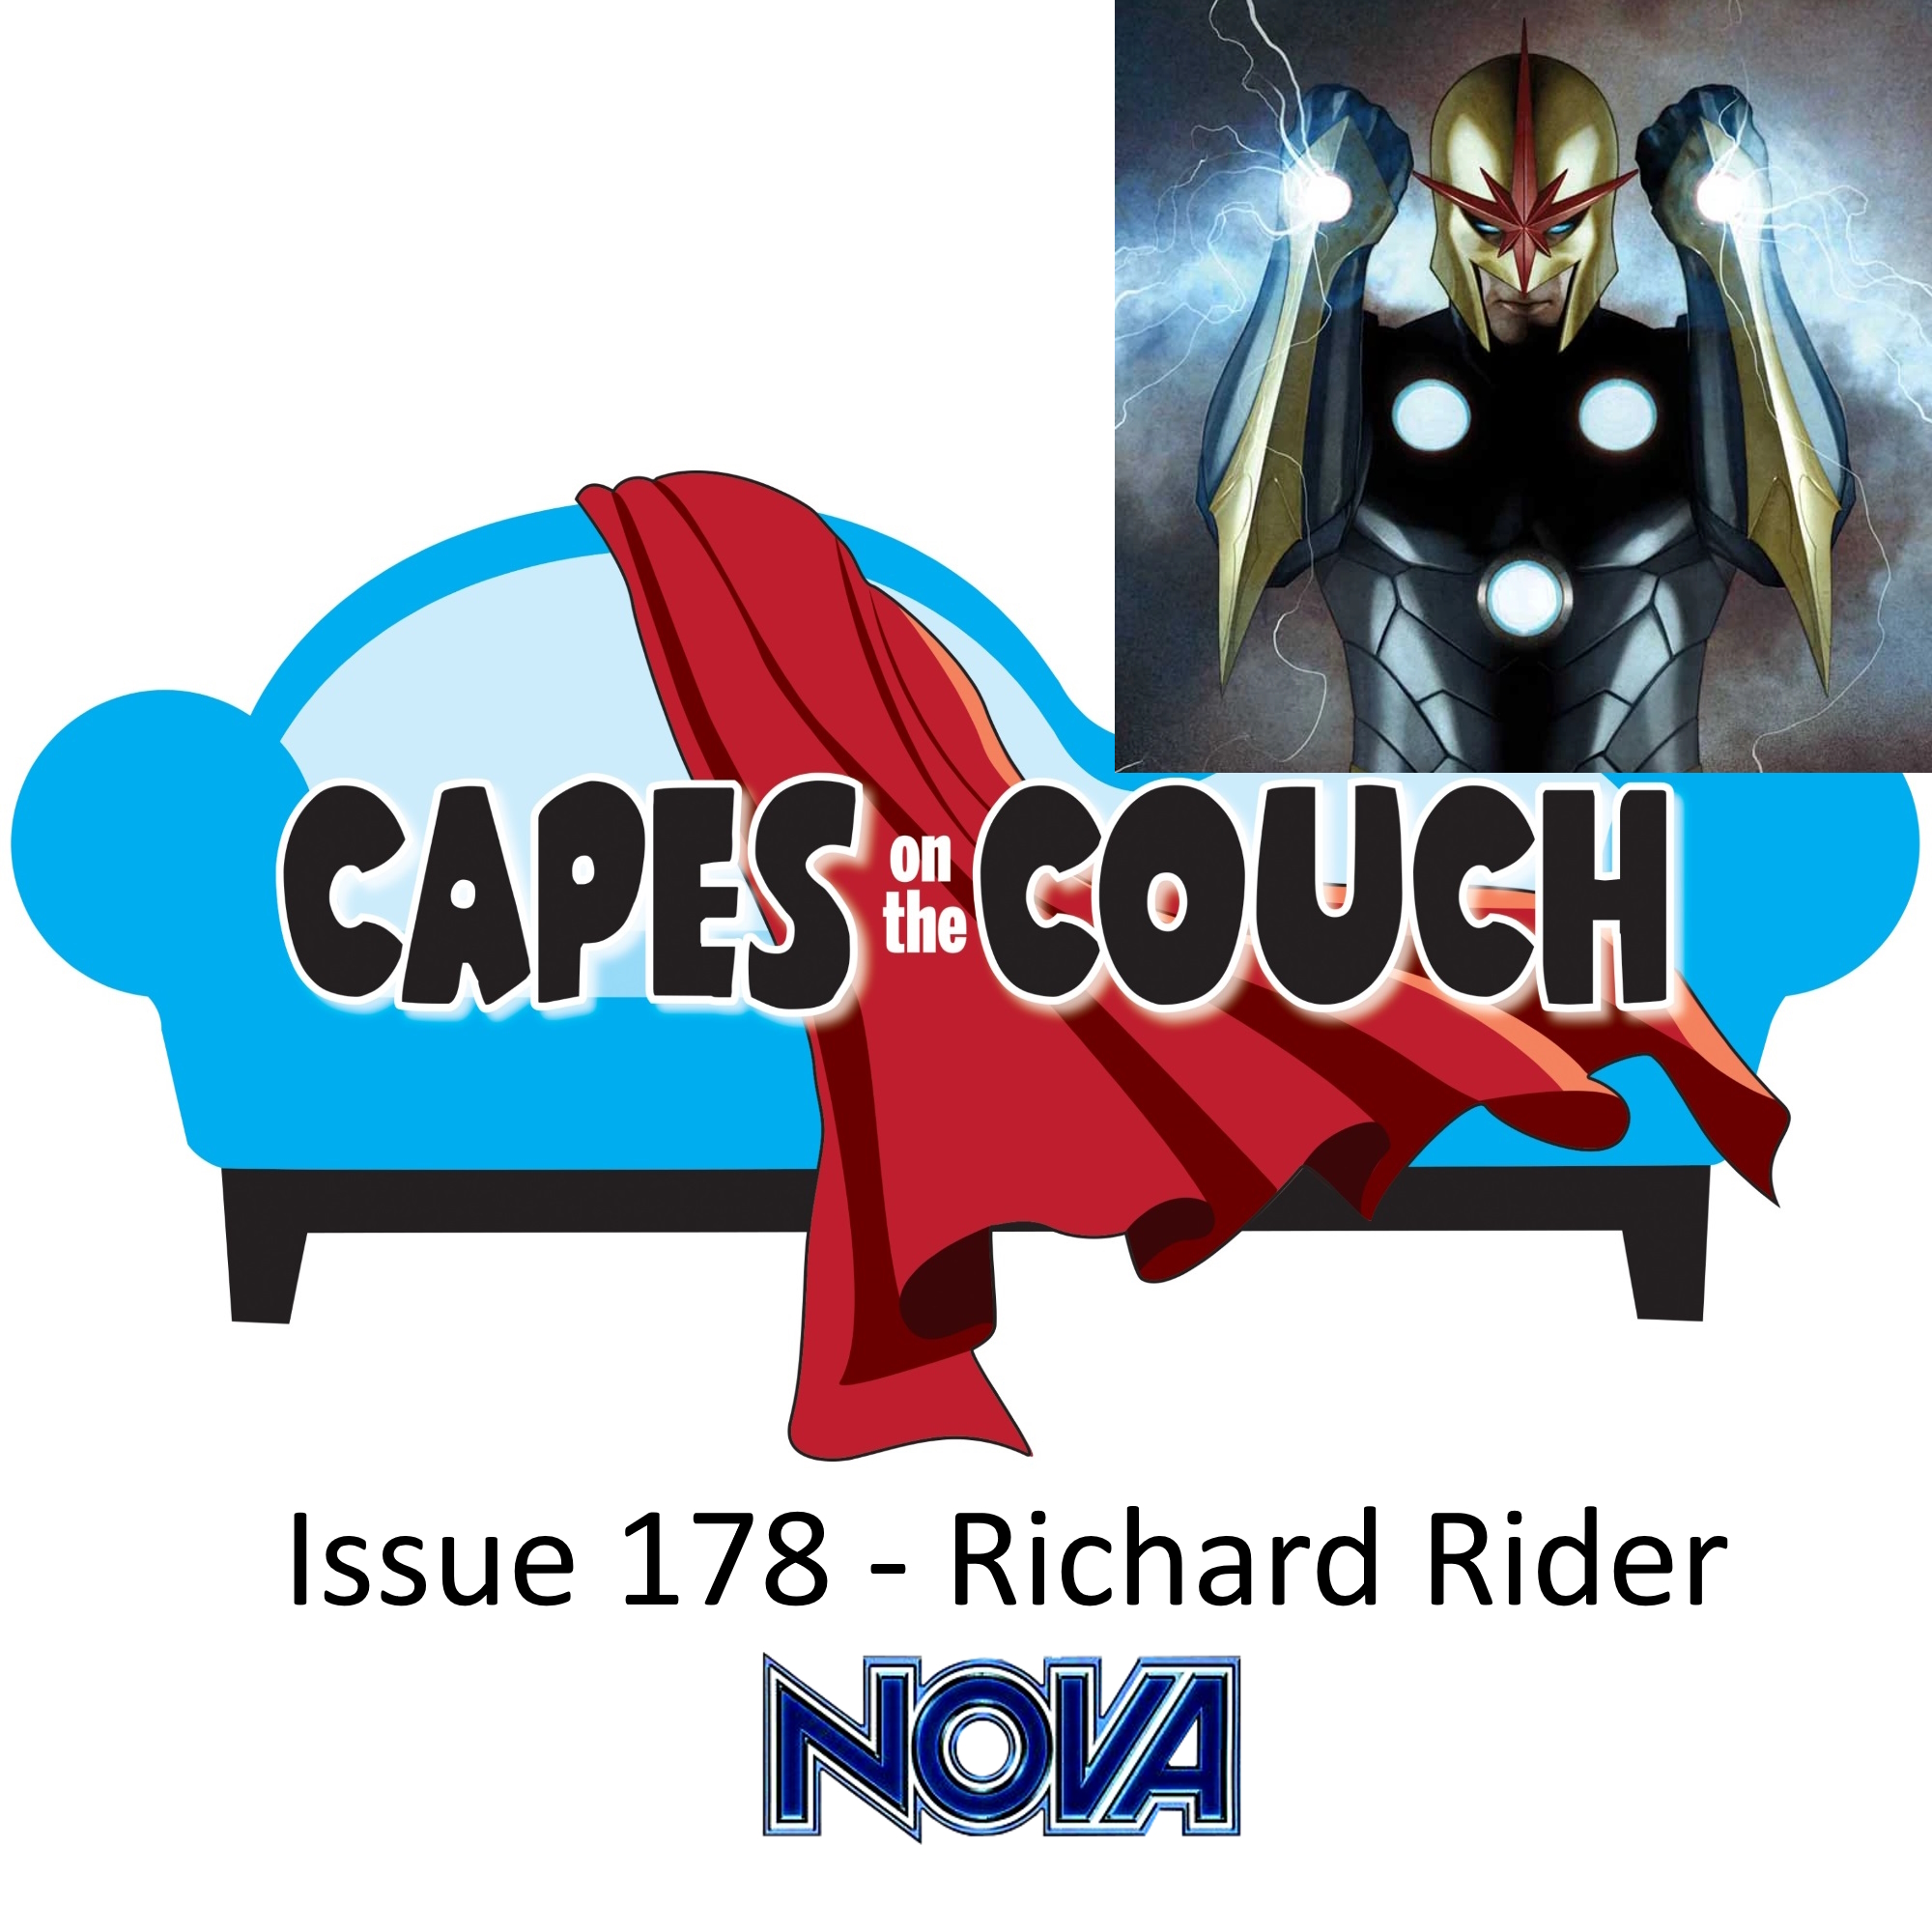 Issue 178 – Richard Rider (Nova) post thumbnail image